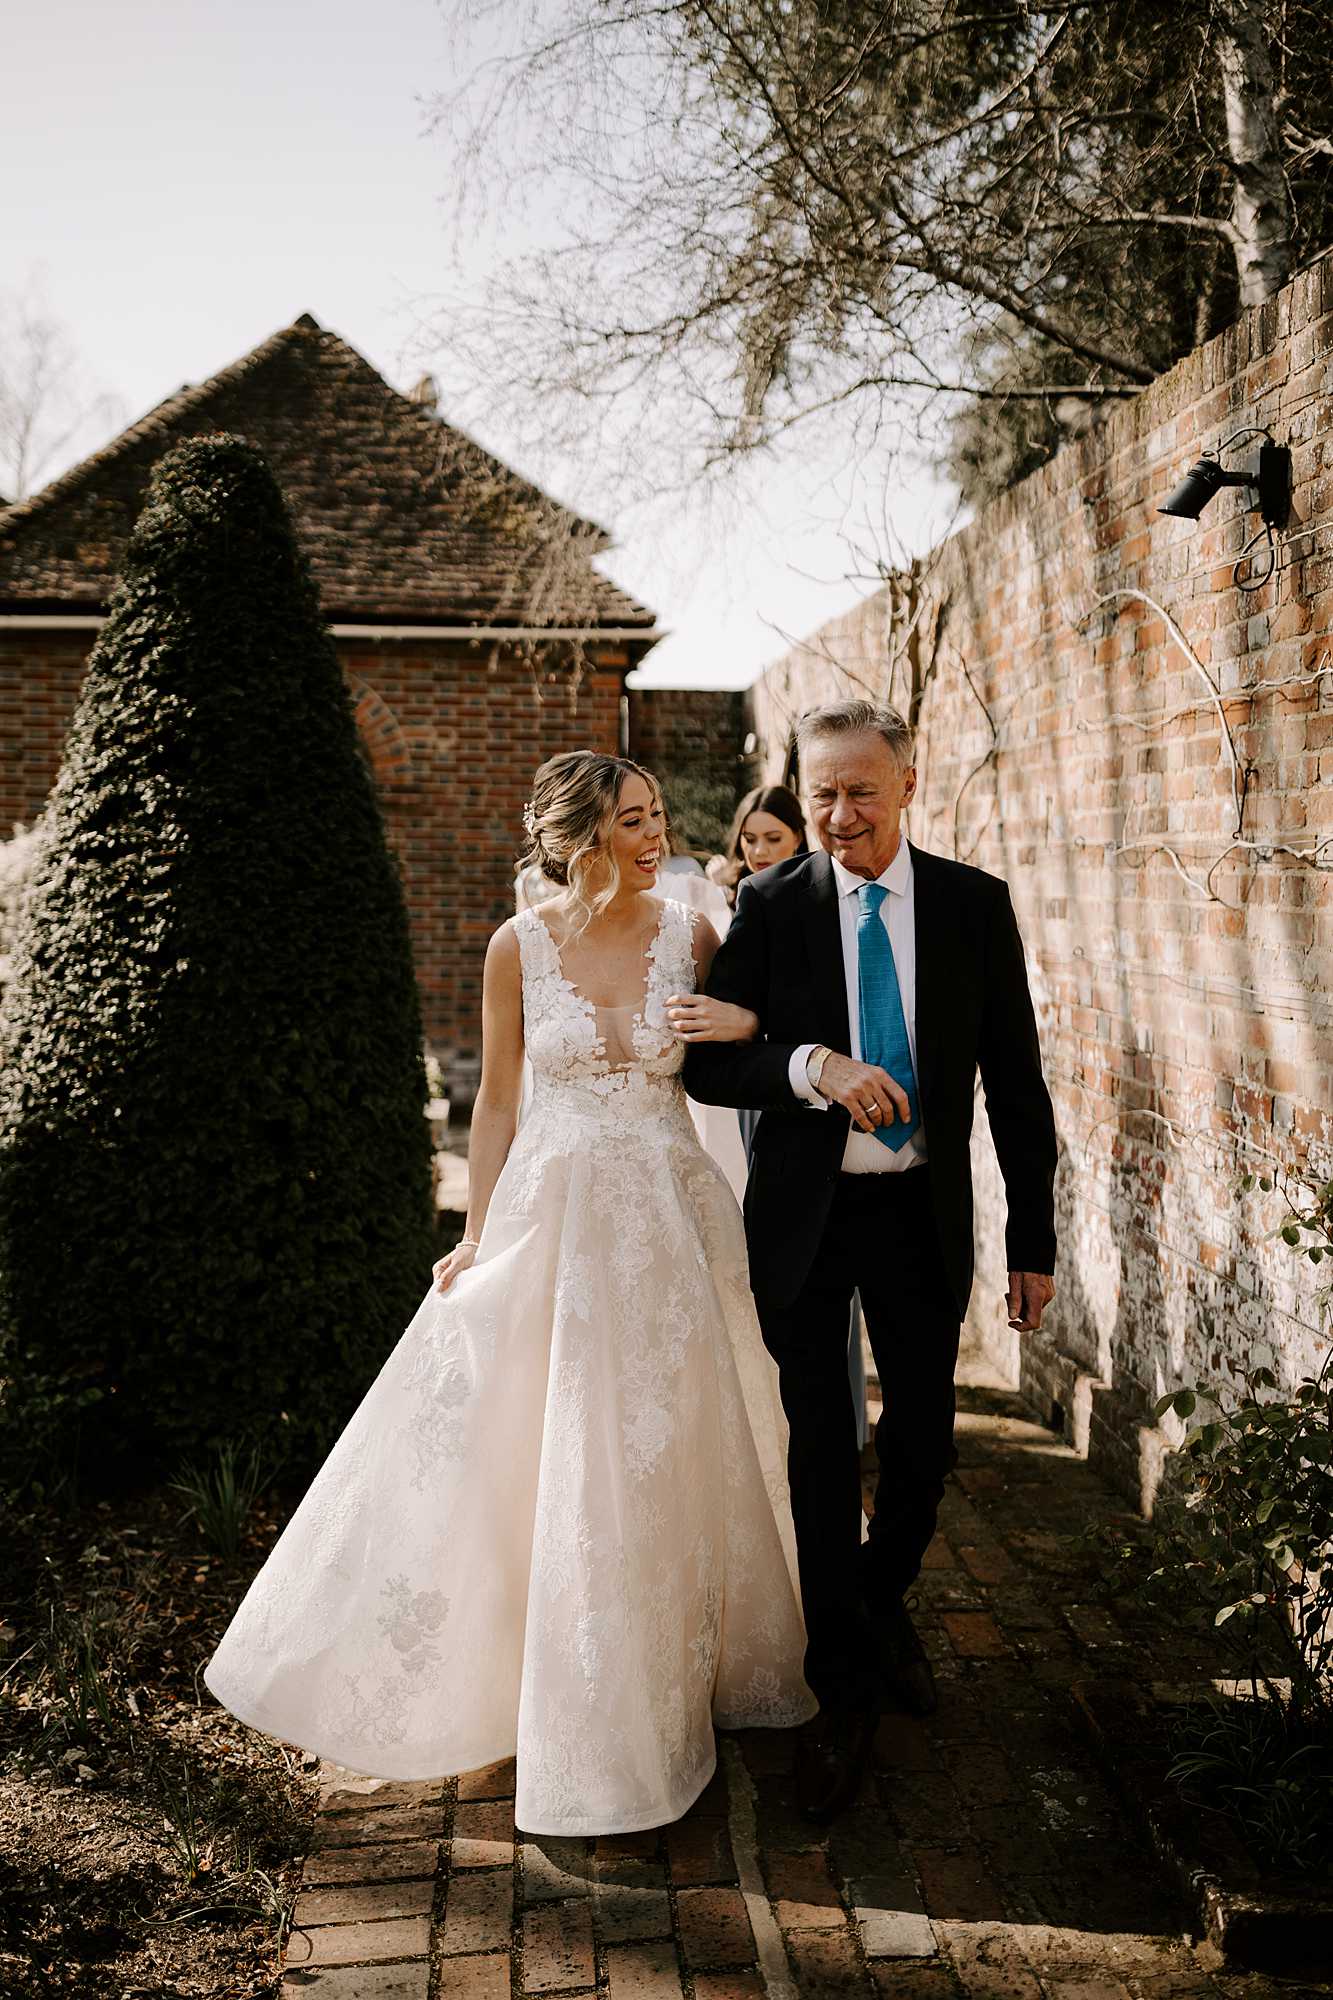 Elegant wedding at The Orangery in Maidstone